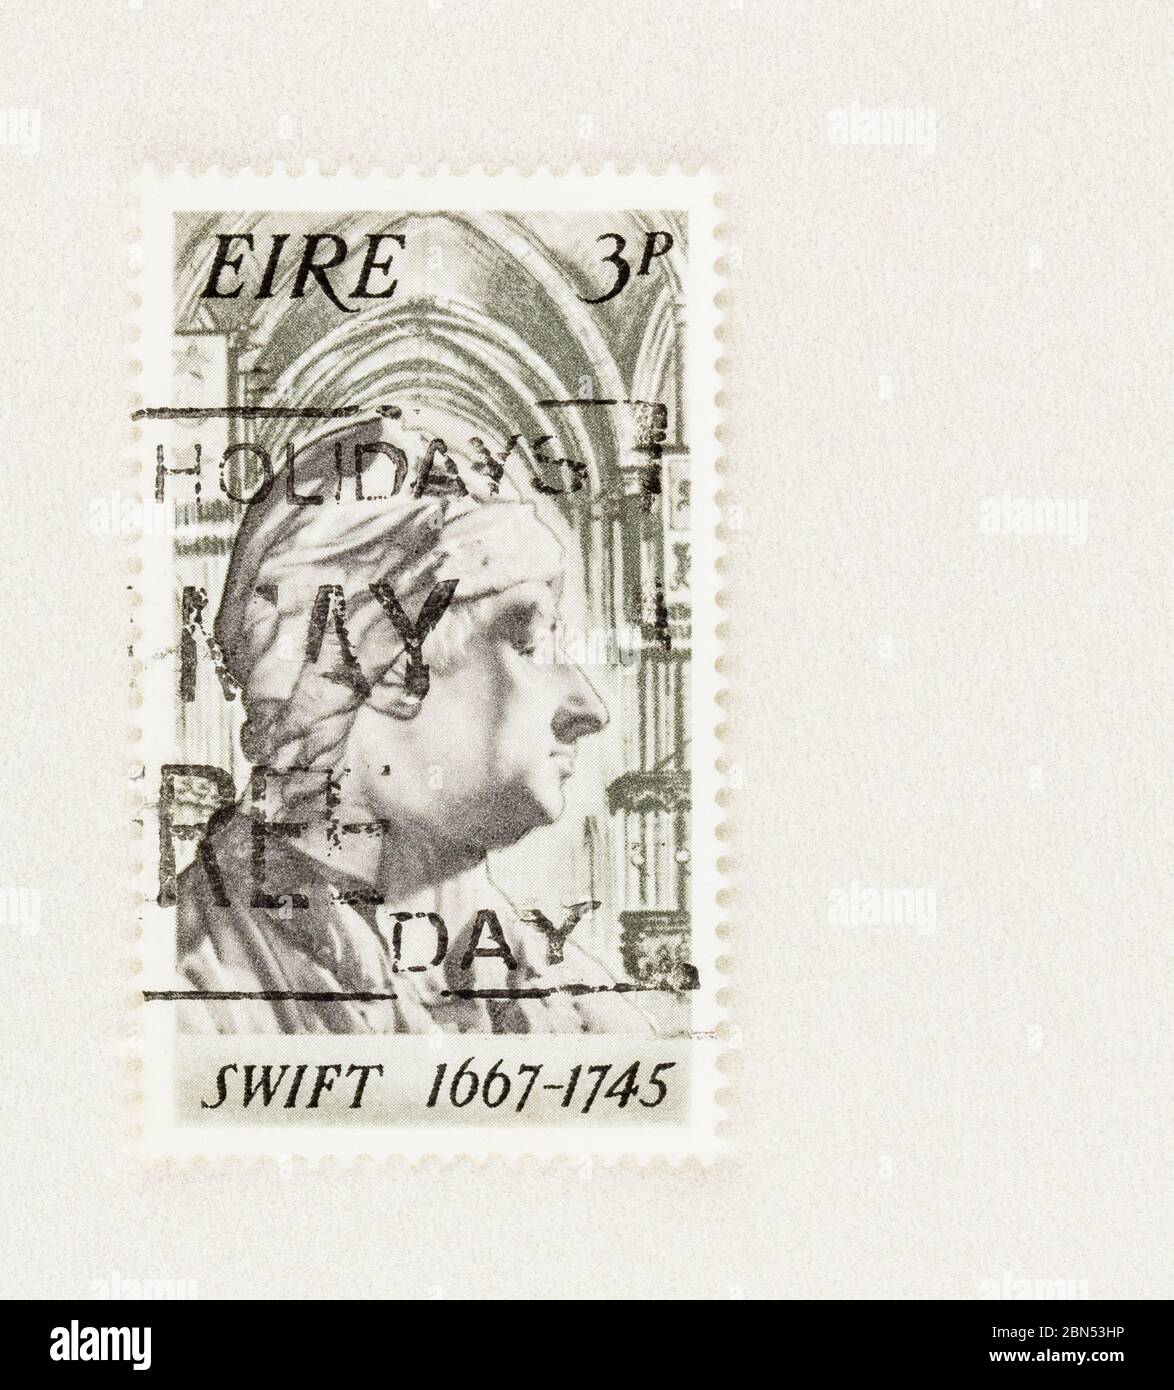 SEATTLE WASHINGTON - May 11, 2020: Irish stamp commemorating 300th anniversary of the birth of Jonathan Swift, author of Gulliver's Travels.  Sc#240 Stock Photo